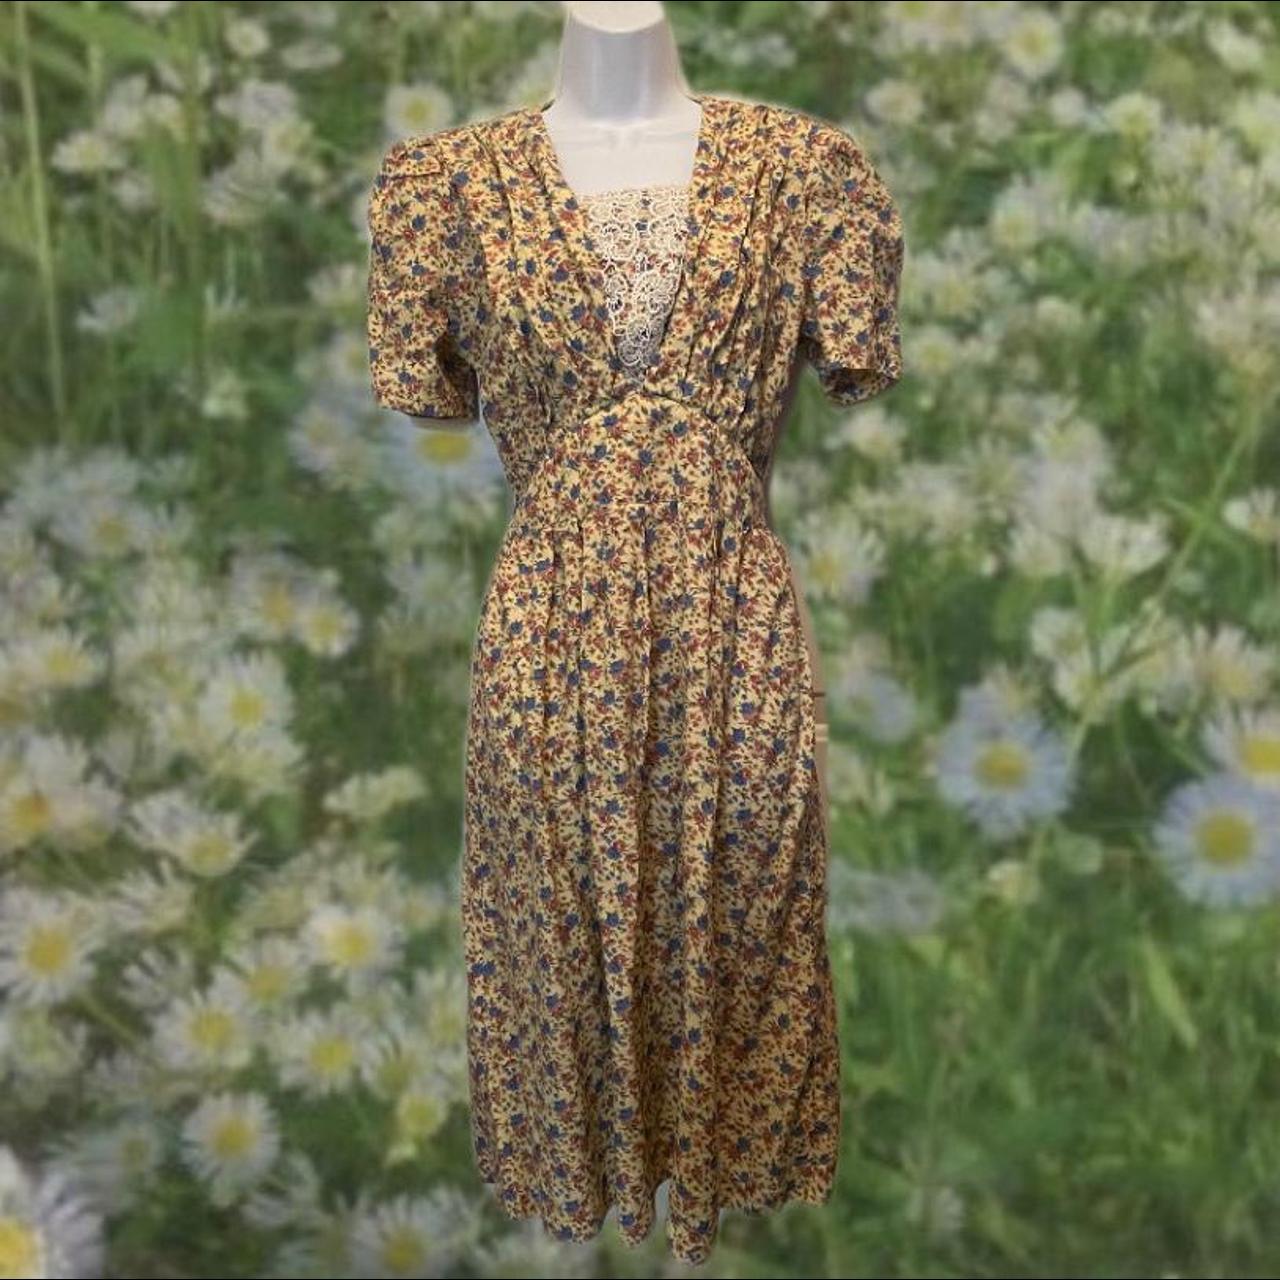 Product Image 1 - - Miss Dorby cottagecore dress!

#cottagecore